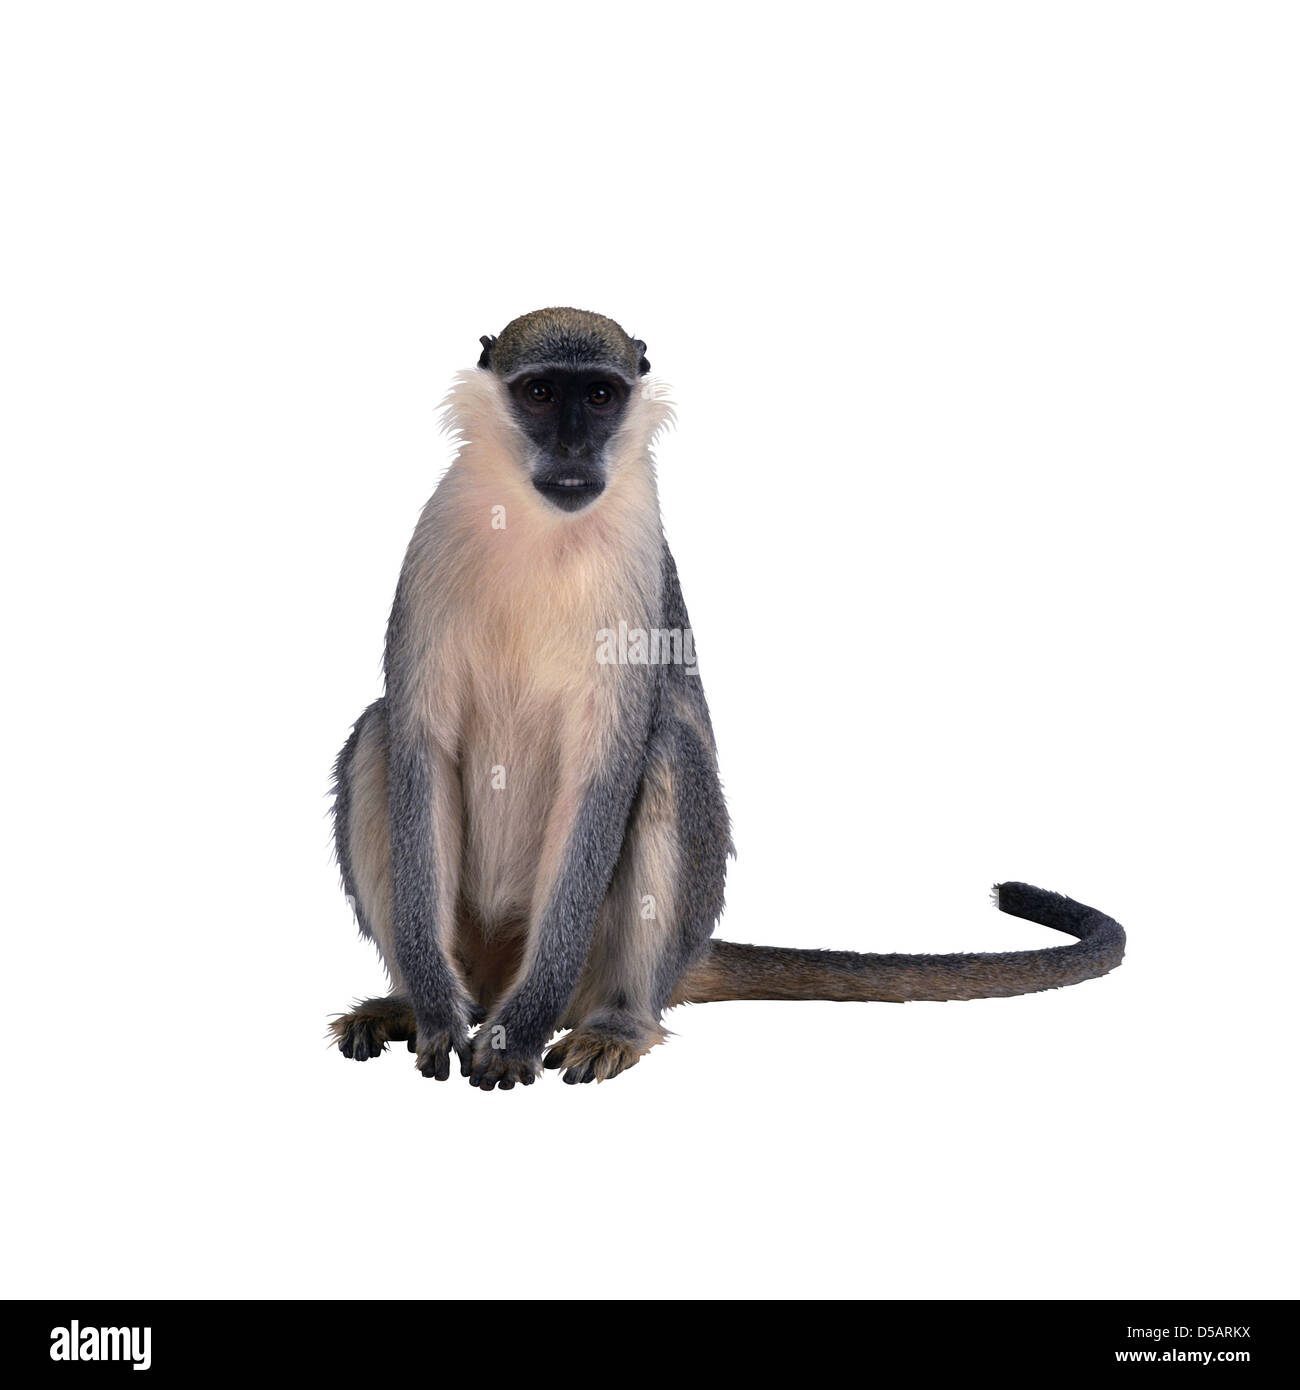 Monkey on the white background Stock Photo - Alamy